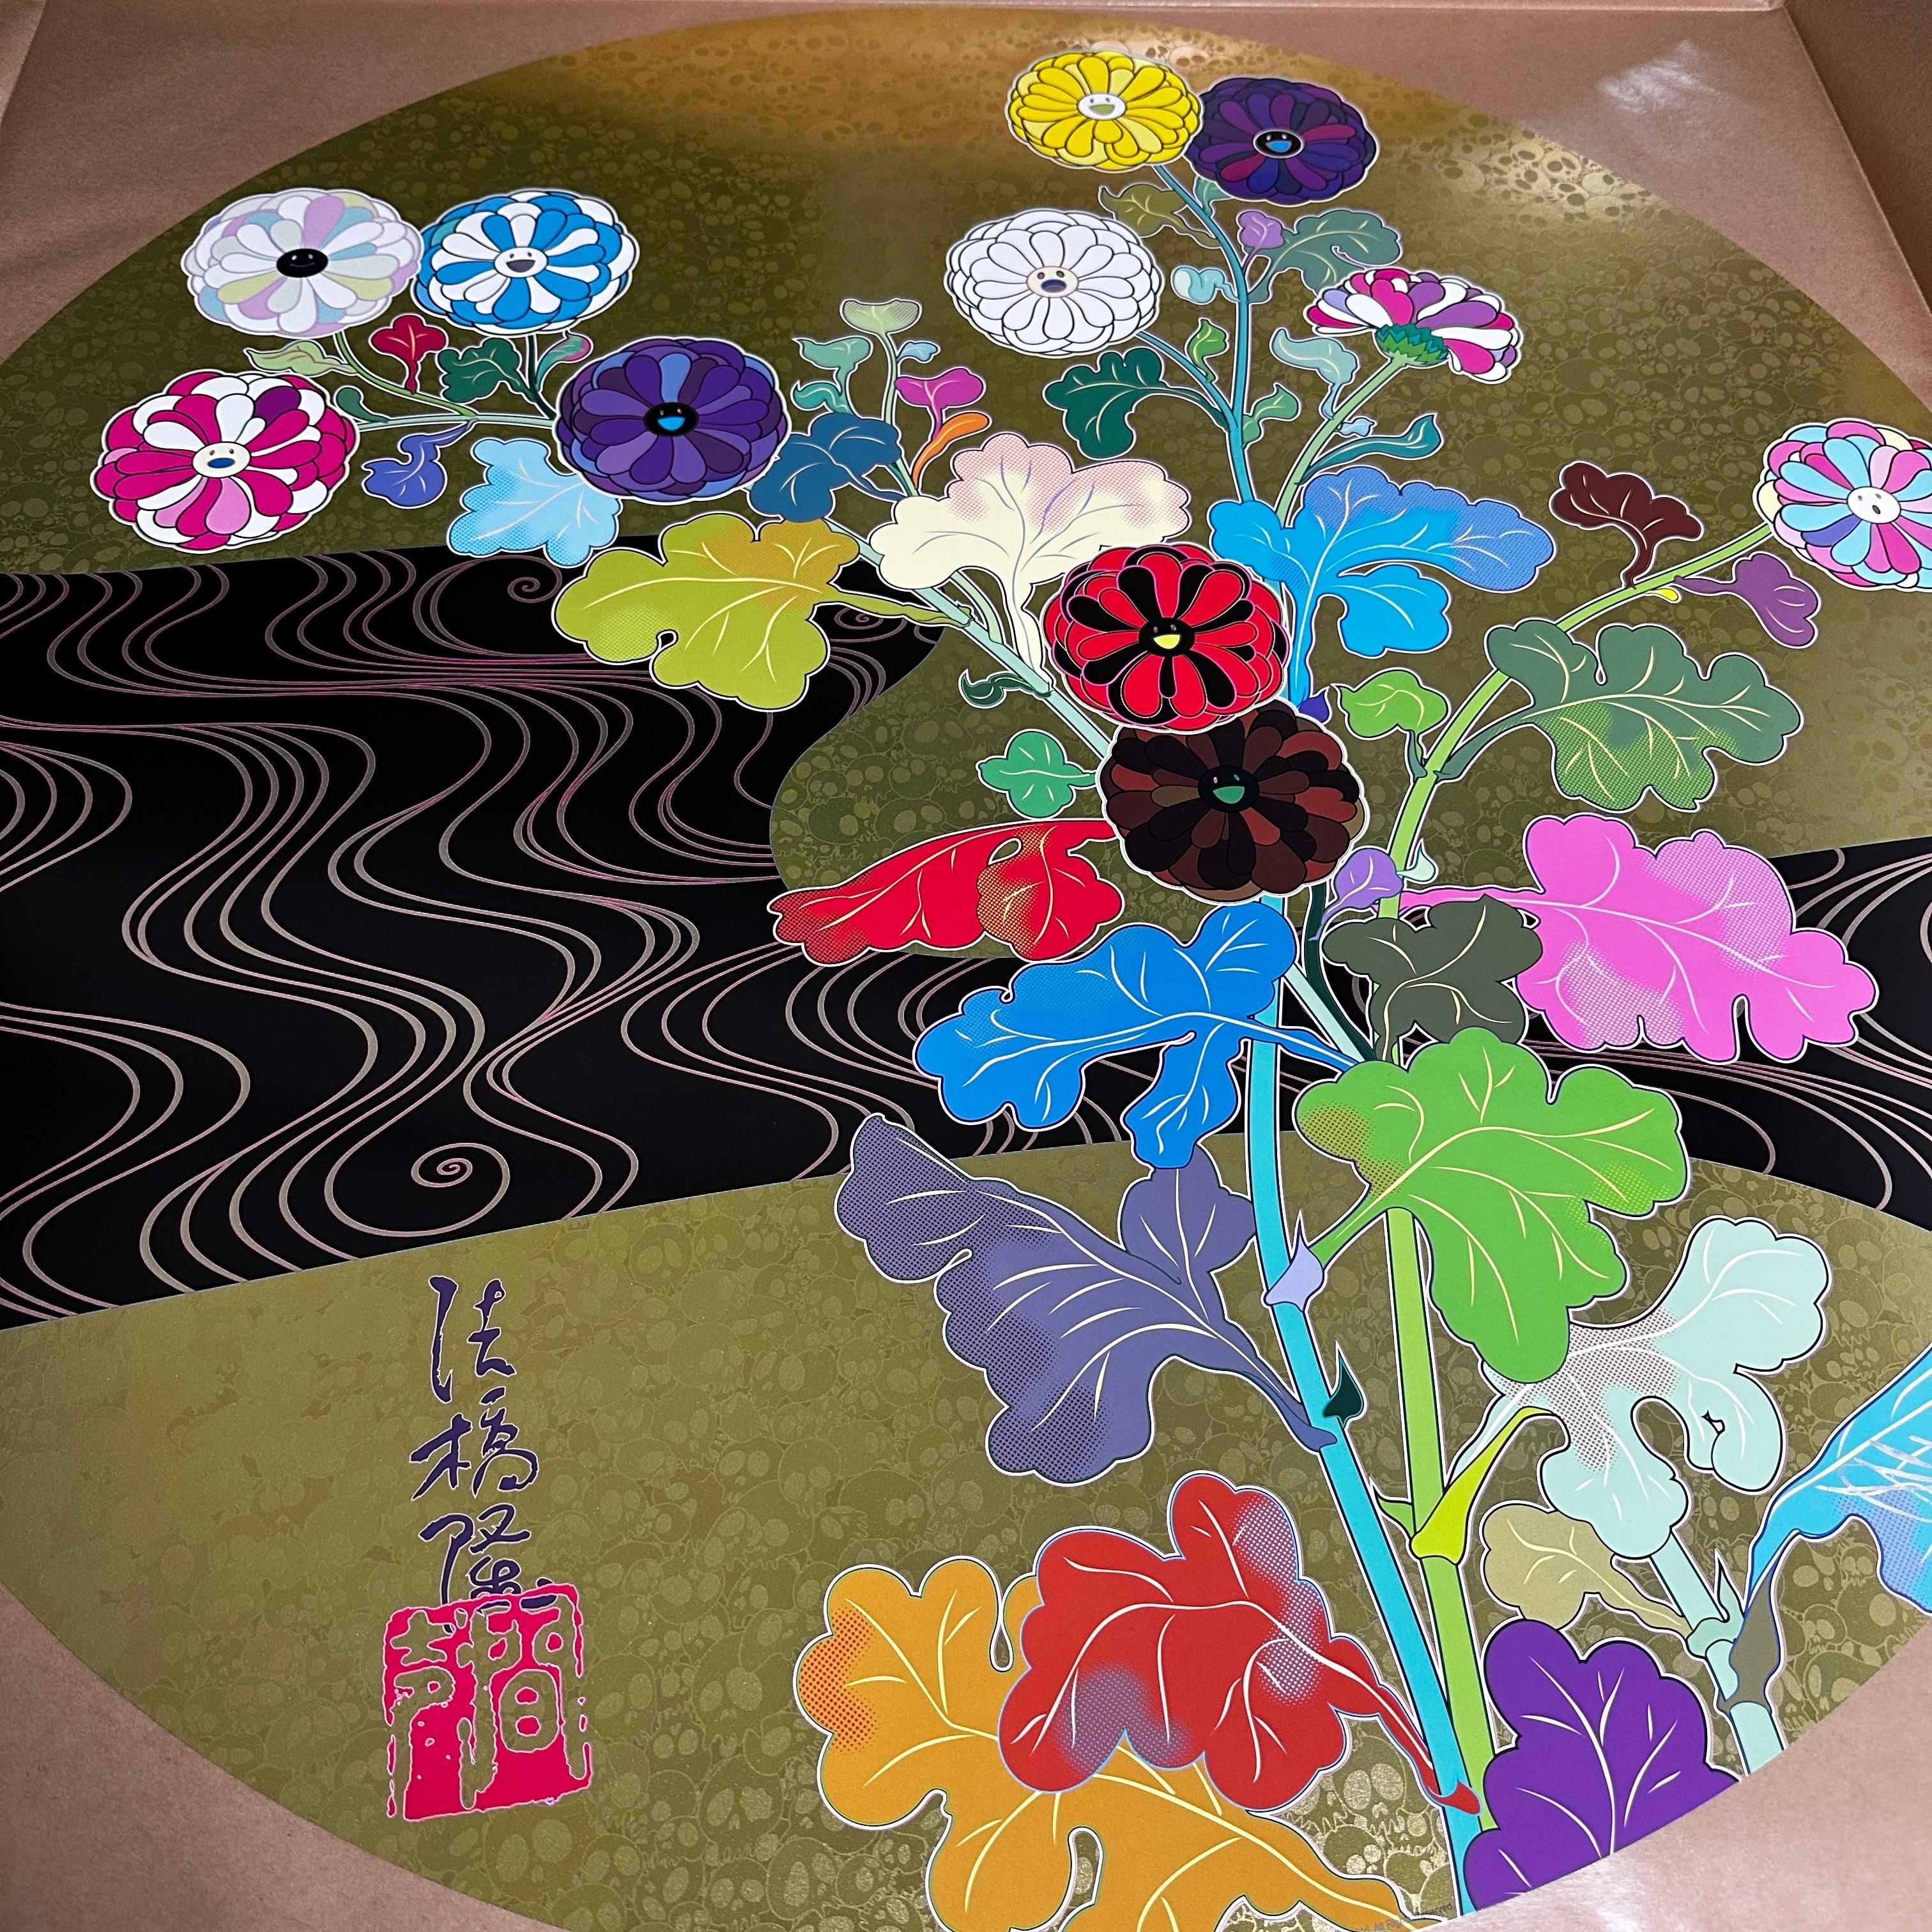 Korin: The Golden River (Japan, Takashi Murakami, Tokyo, Flowers) 3